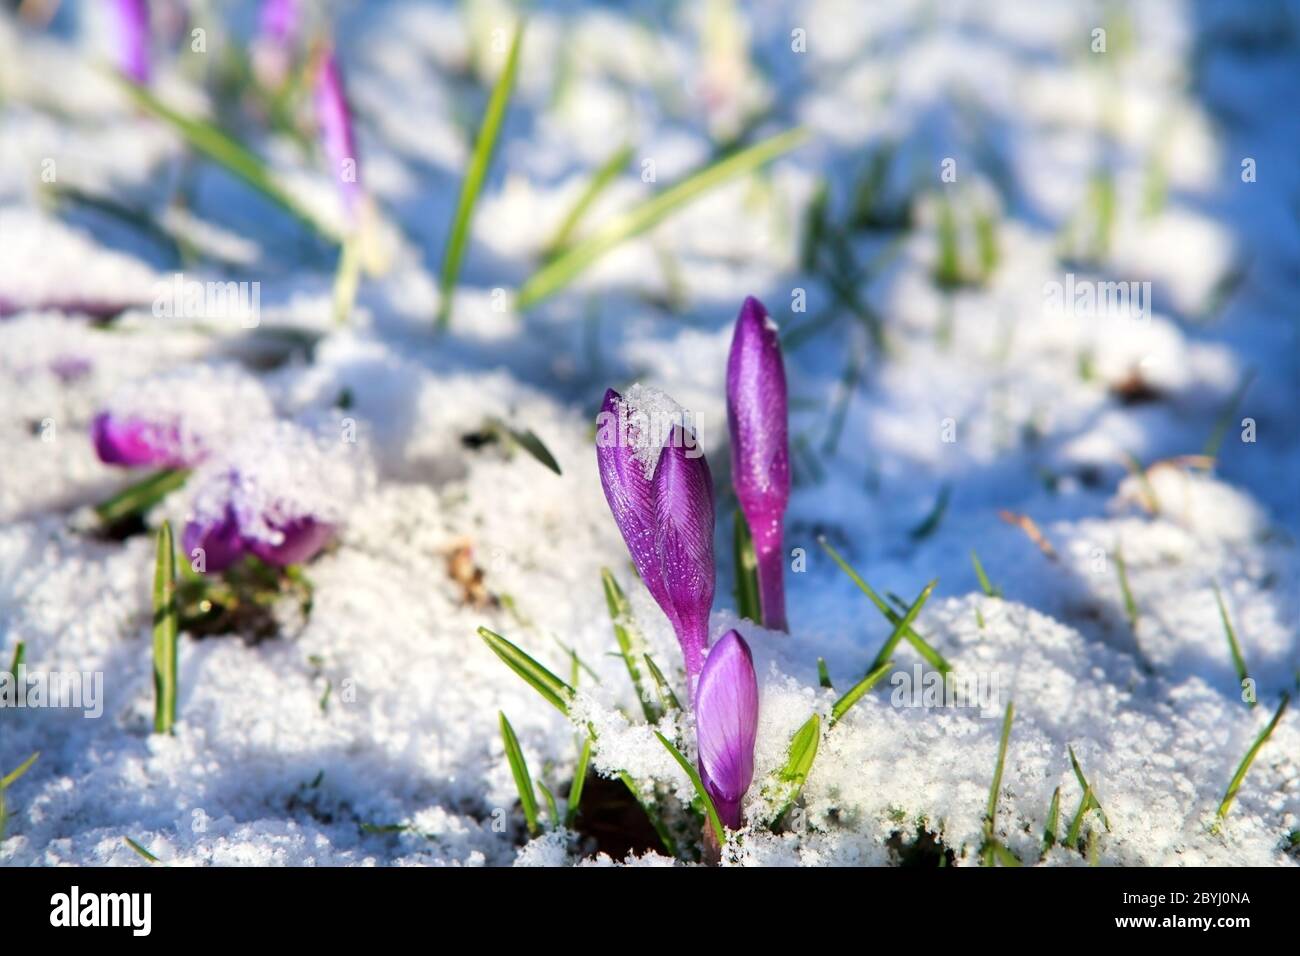 crocus flowers in snow Stock Photo